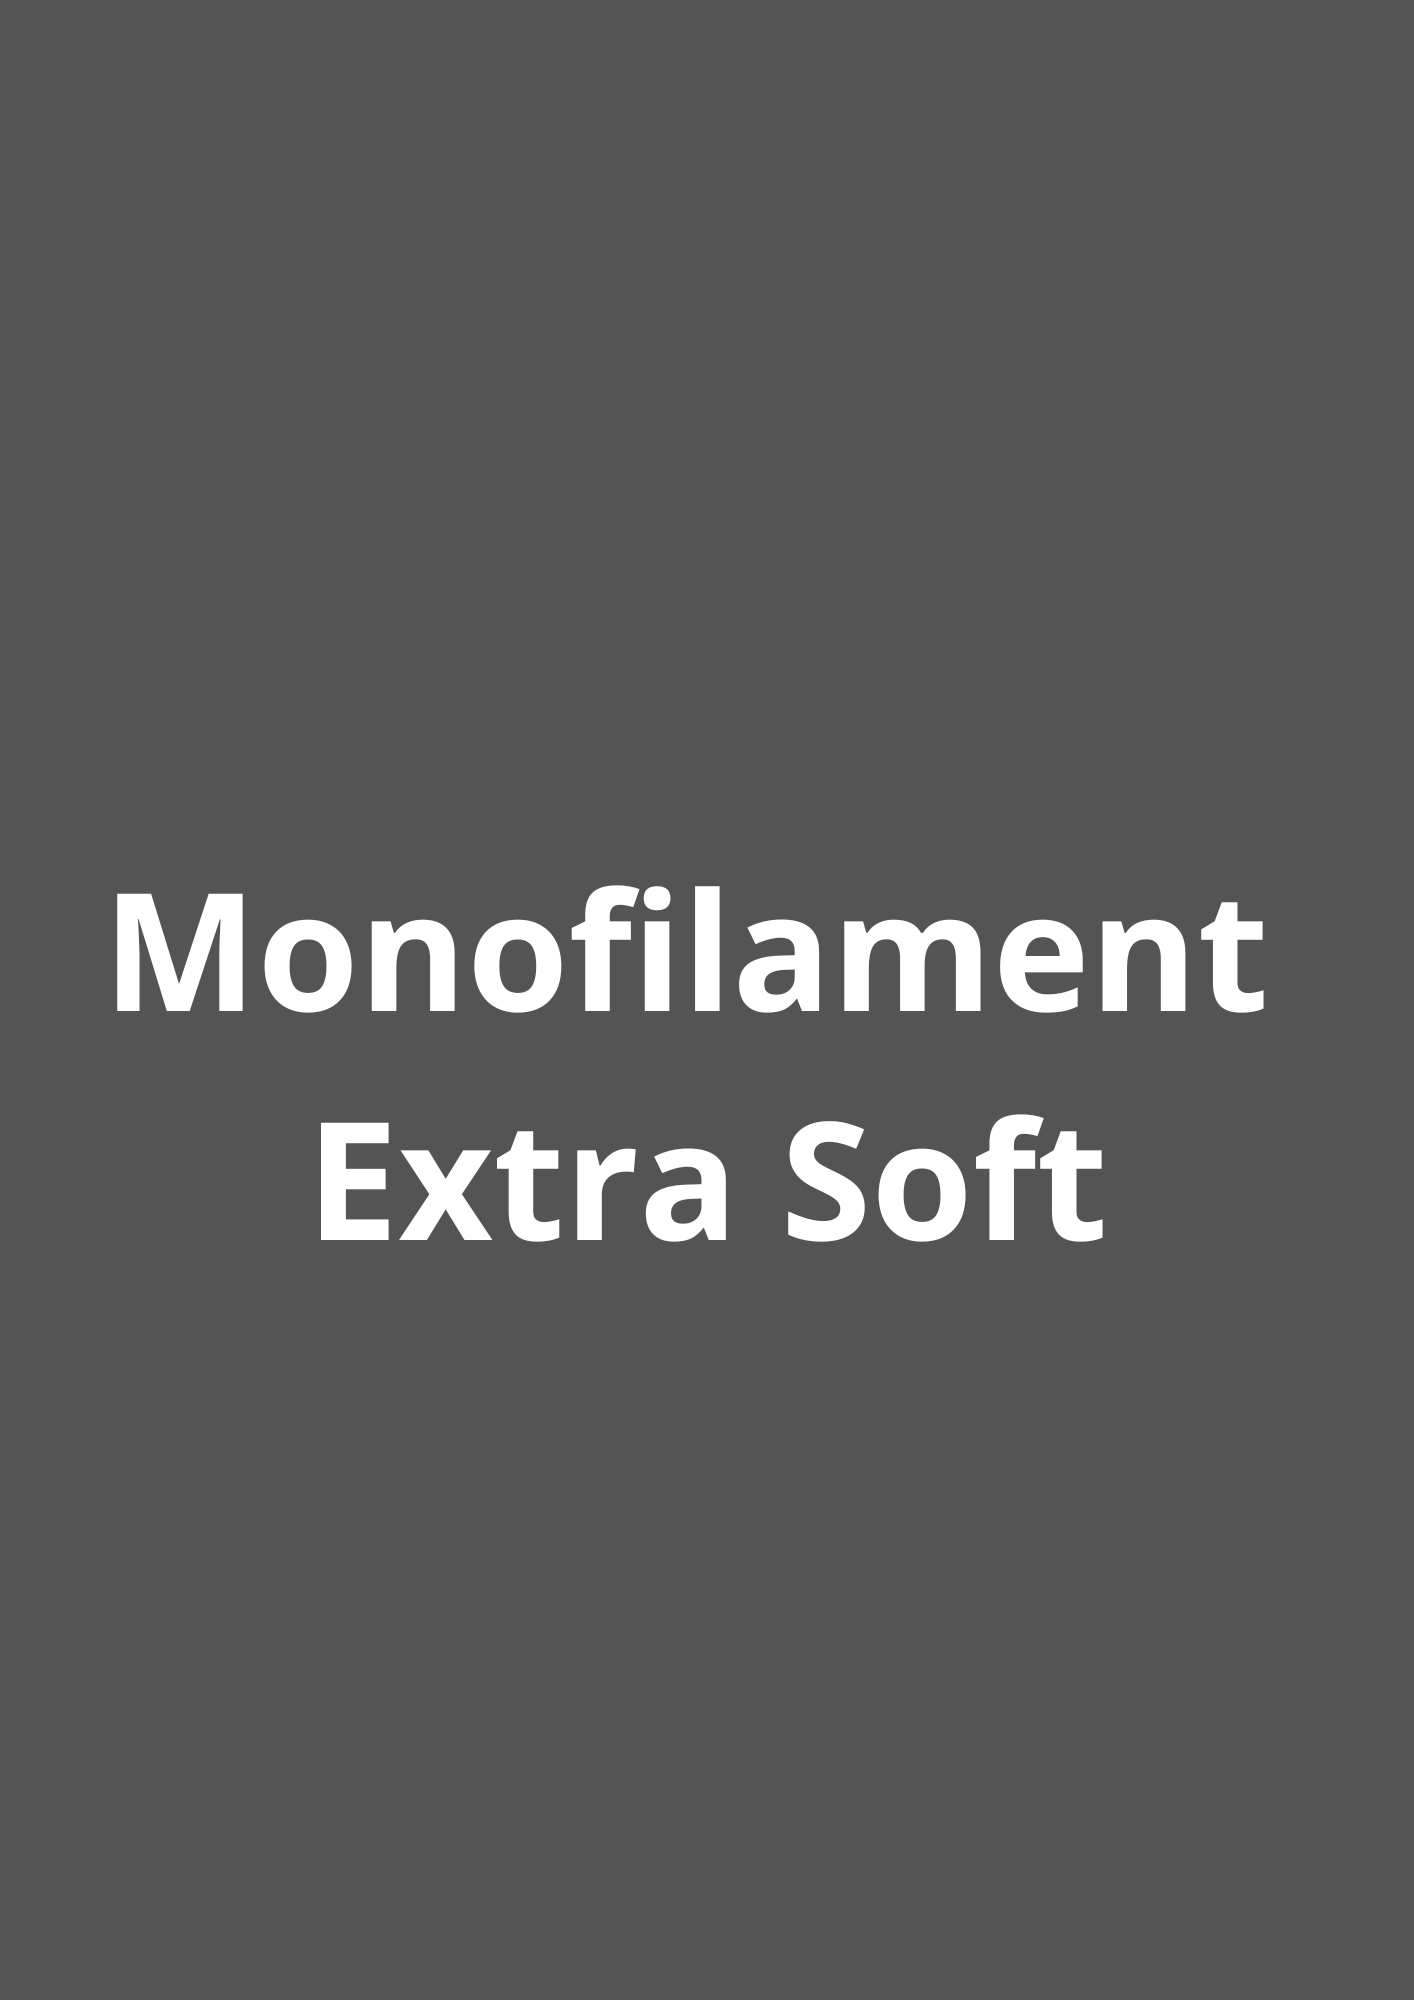 Cordages monofilament Extra Soft